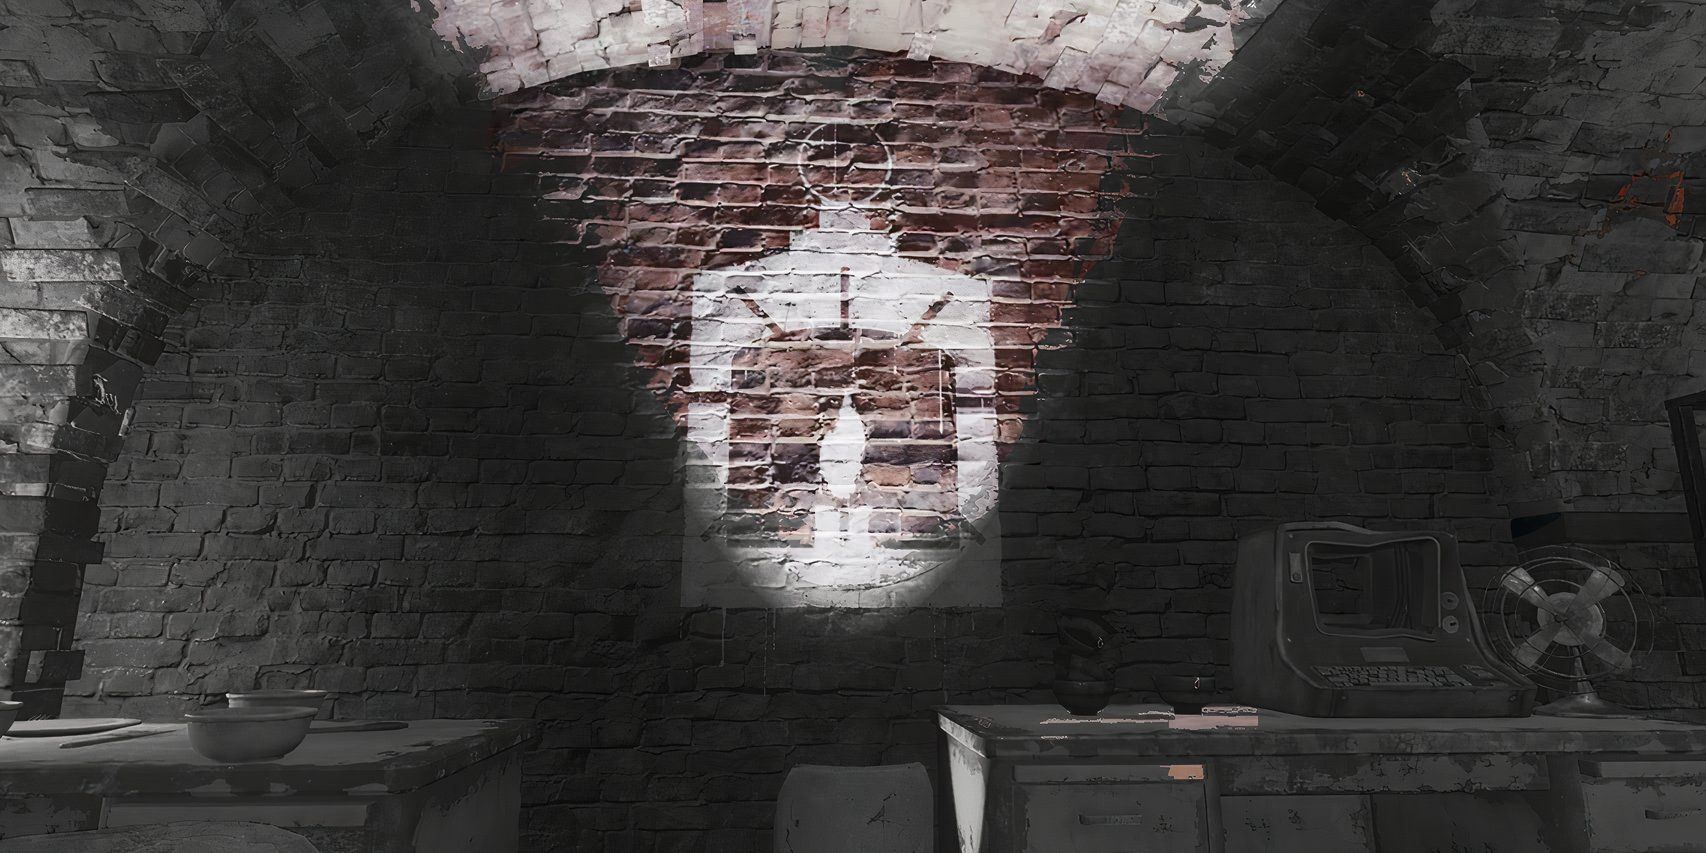 The Railroad logo illuminated on a brick wall in Fallout